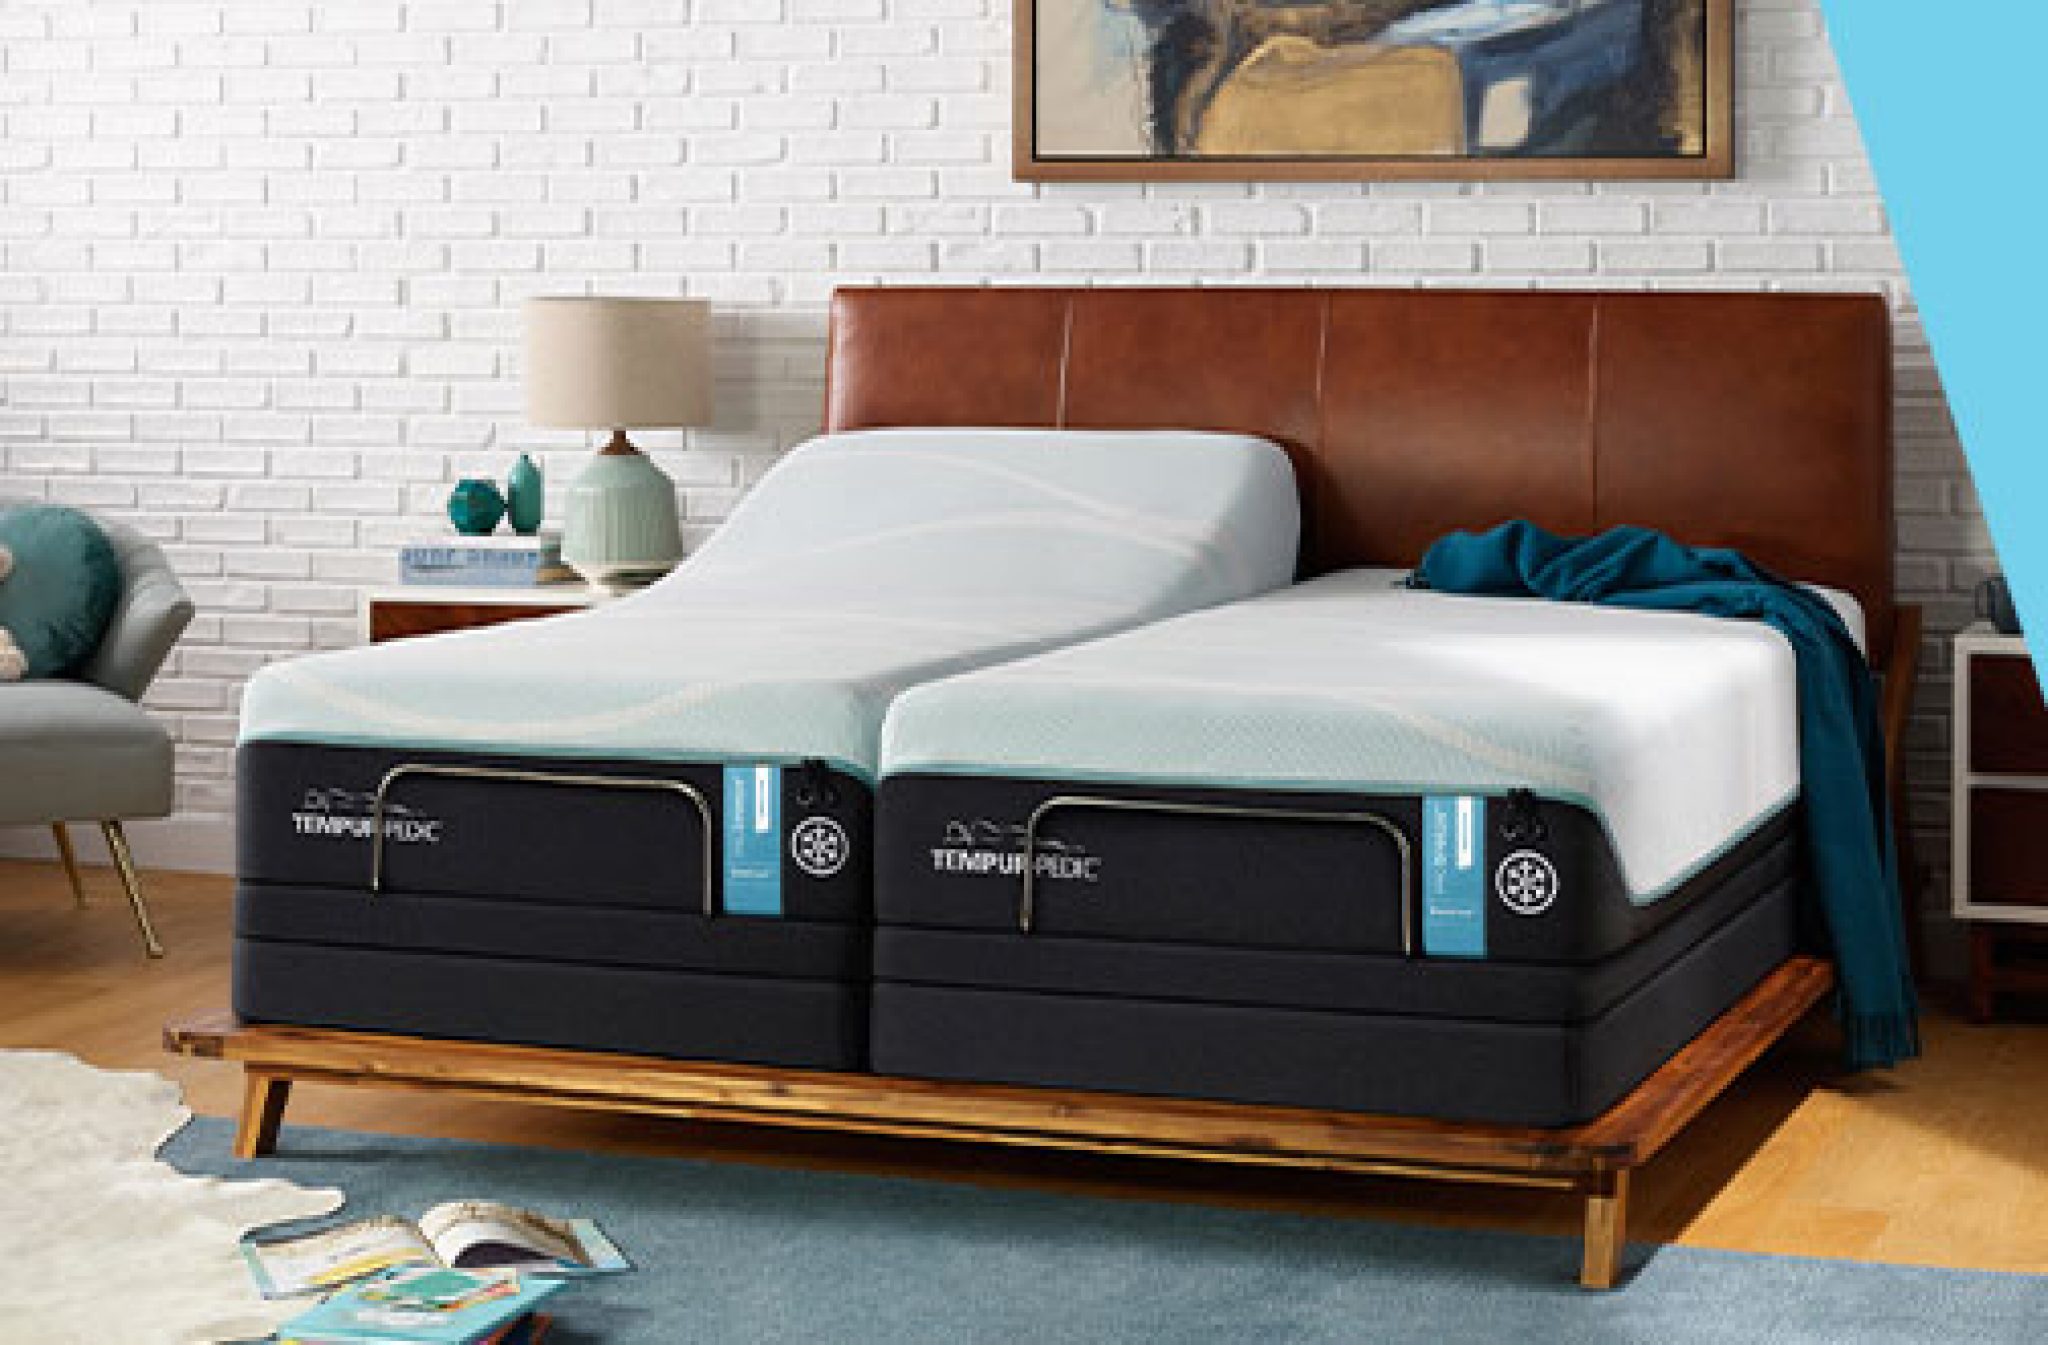 sleep country used mattresses